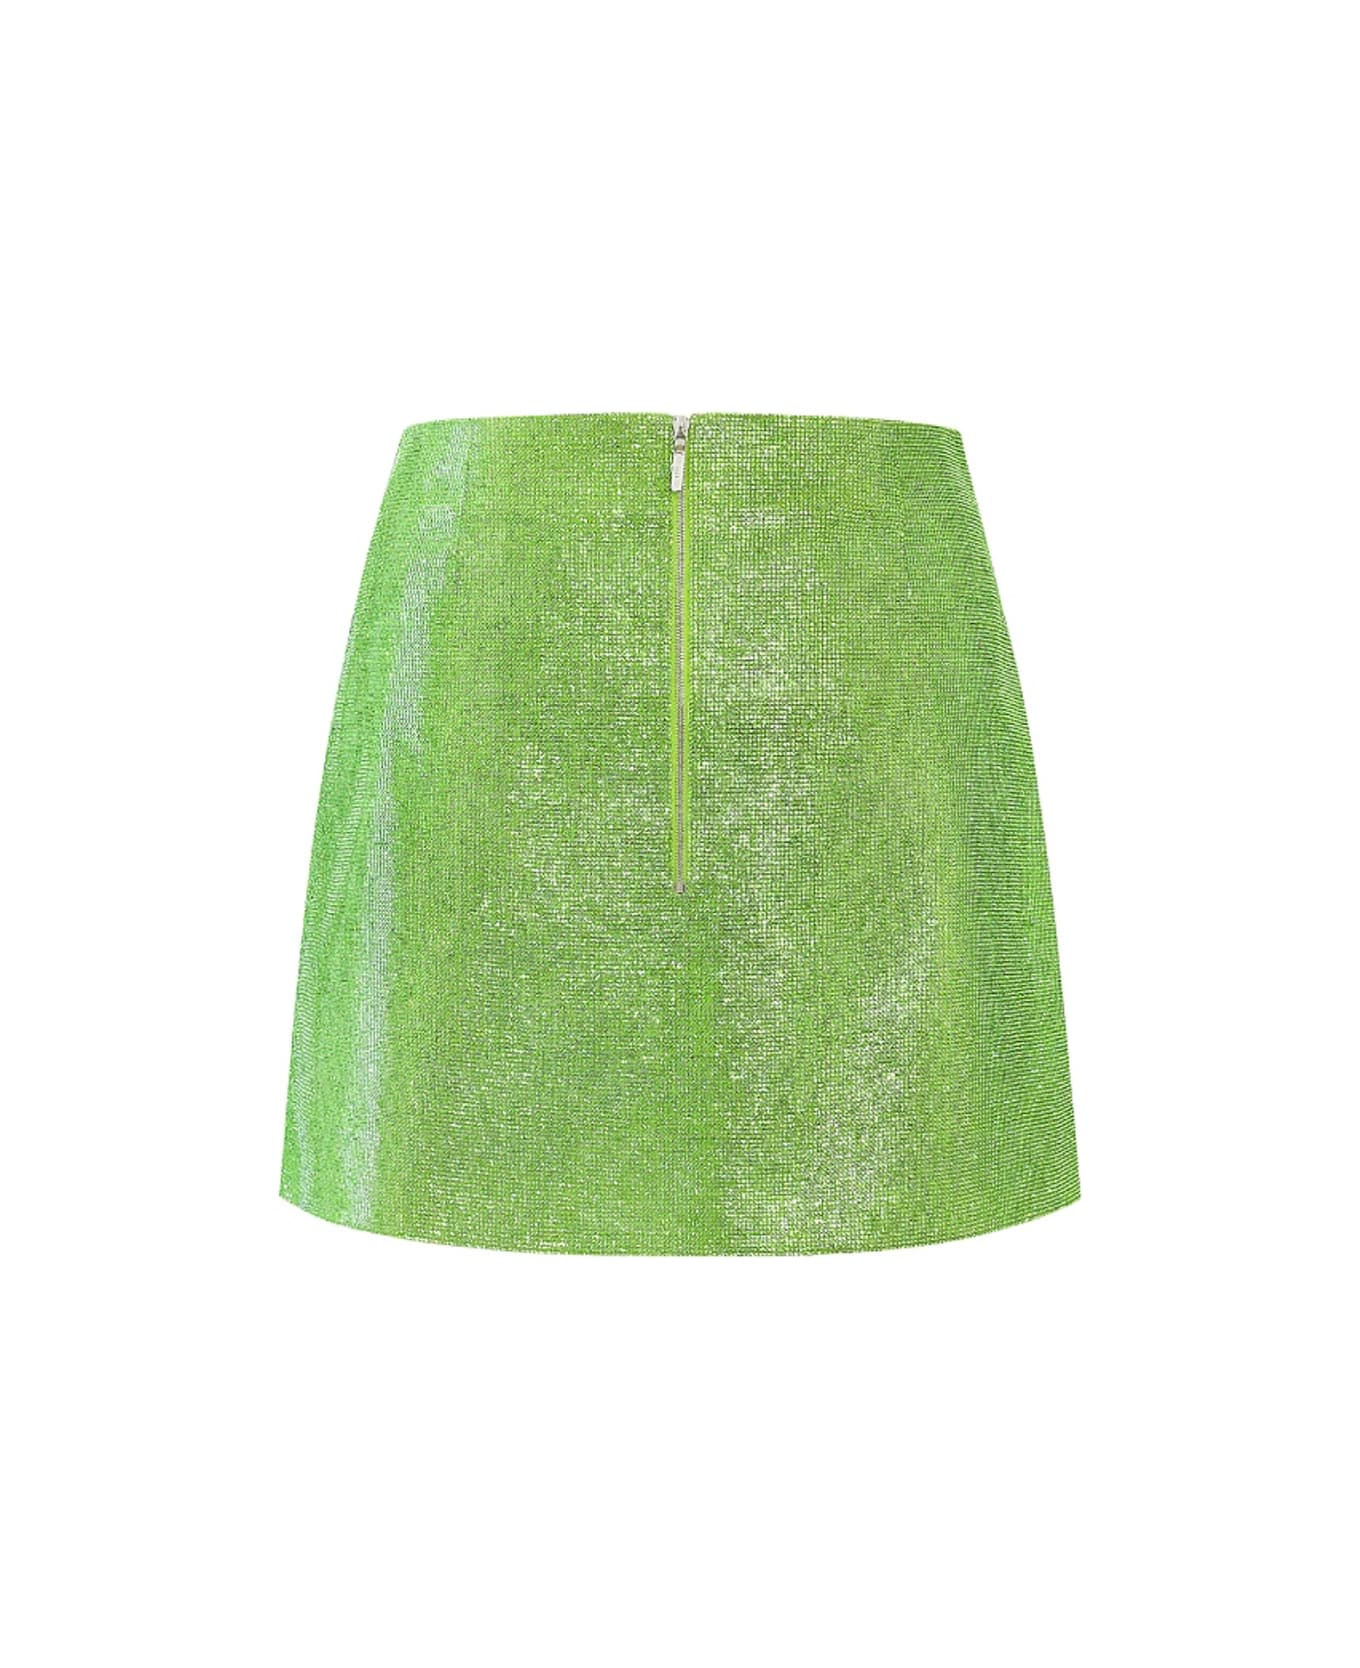 Nué Camille Skirt Neon Green - Green スカート